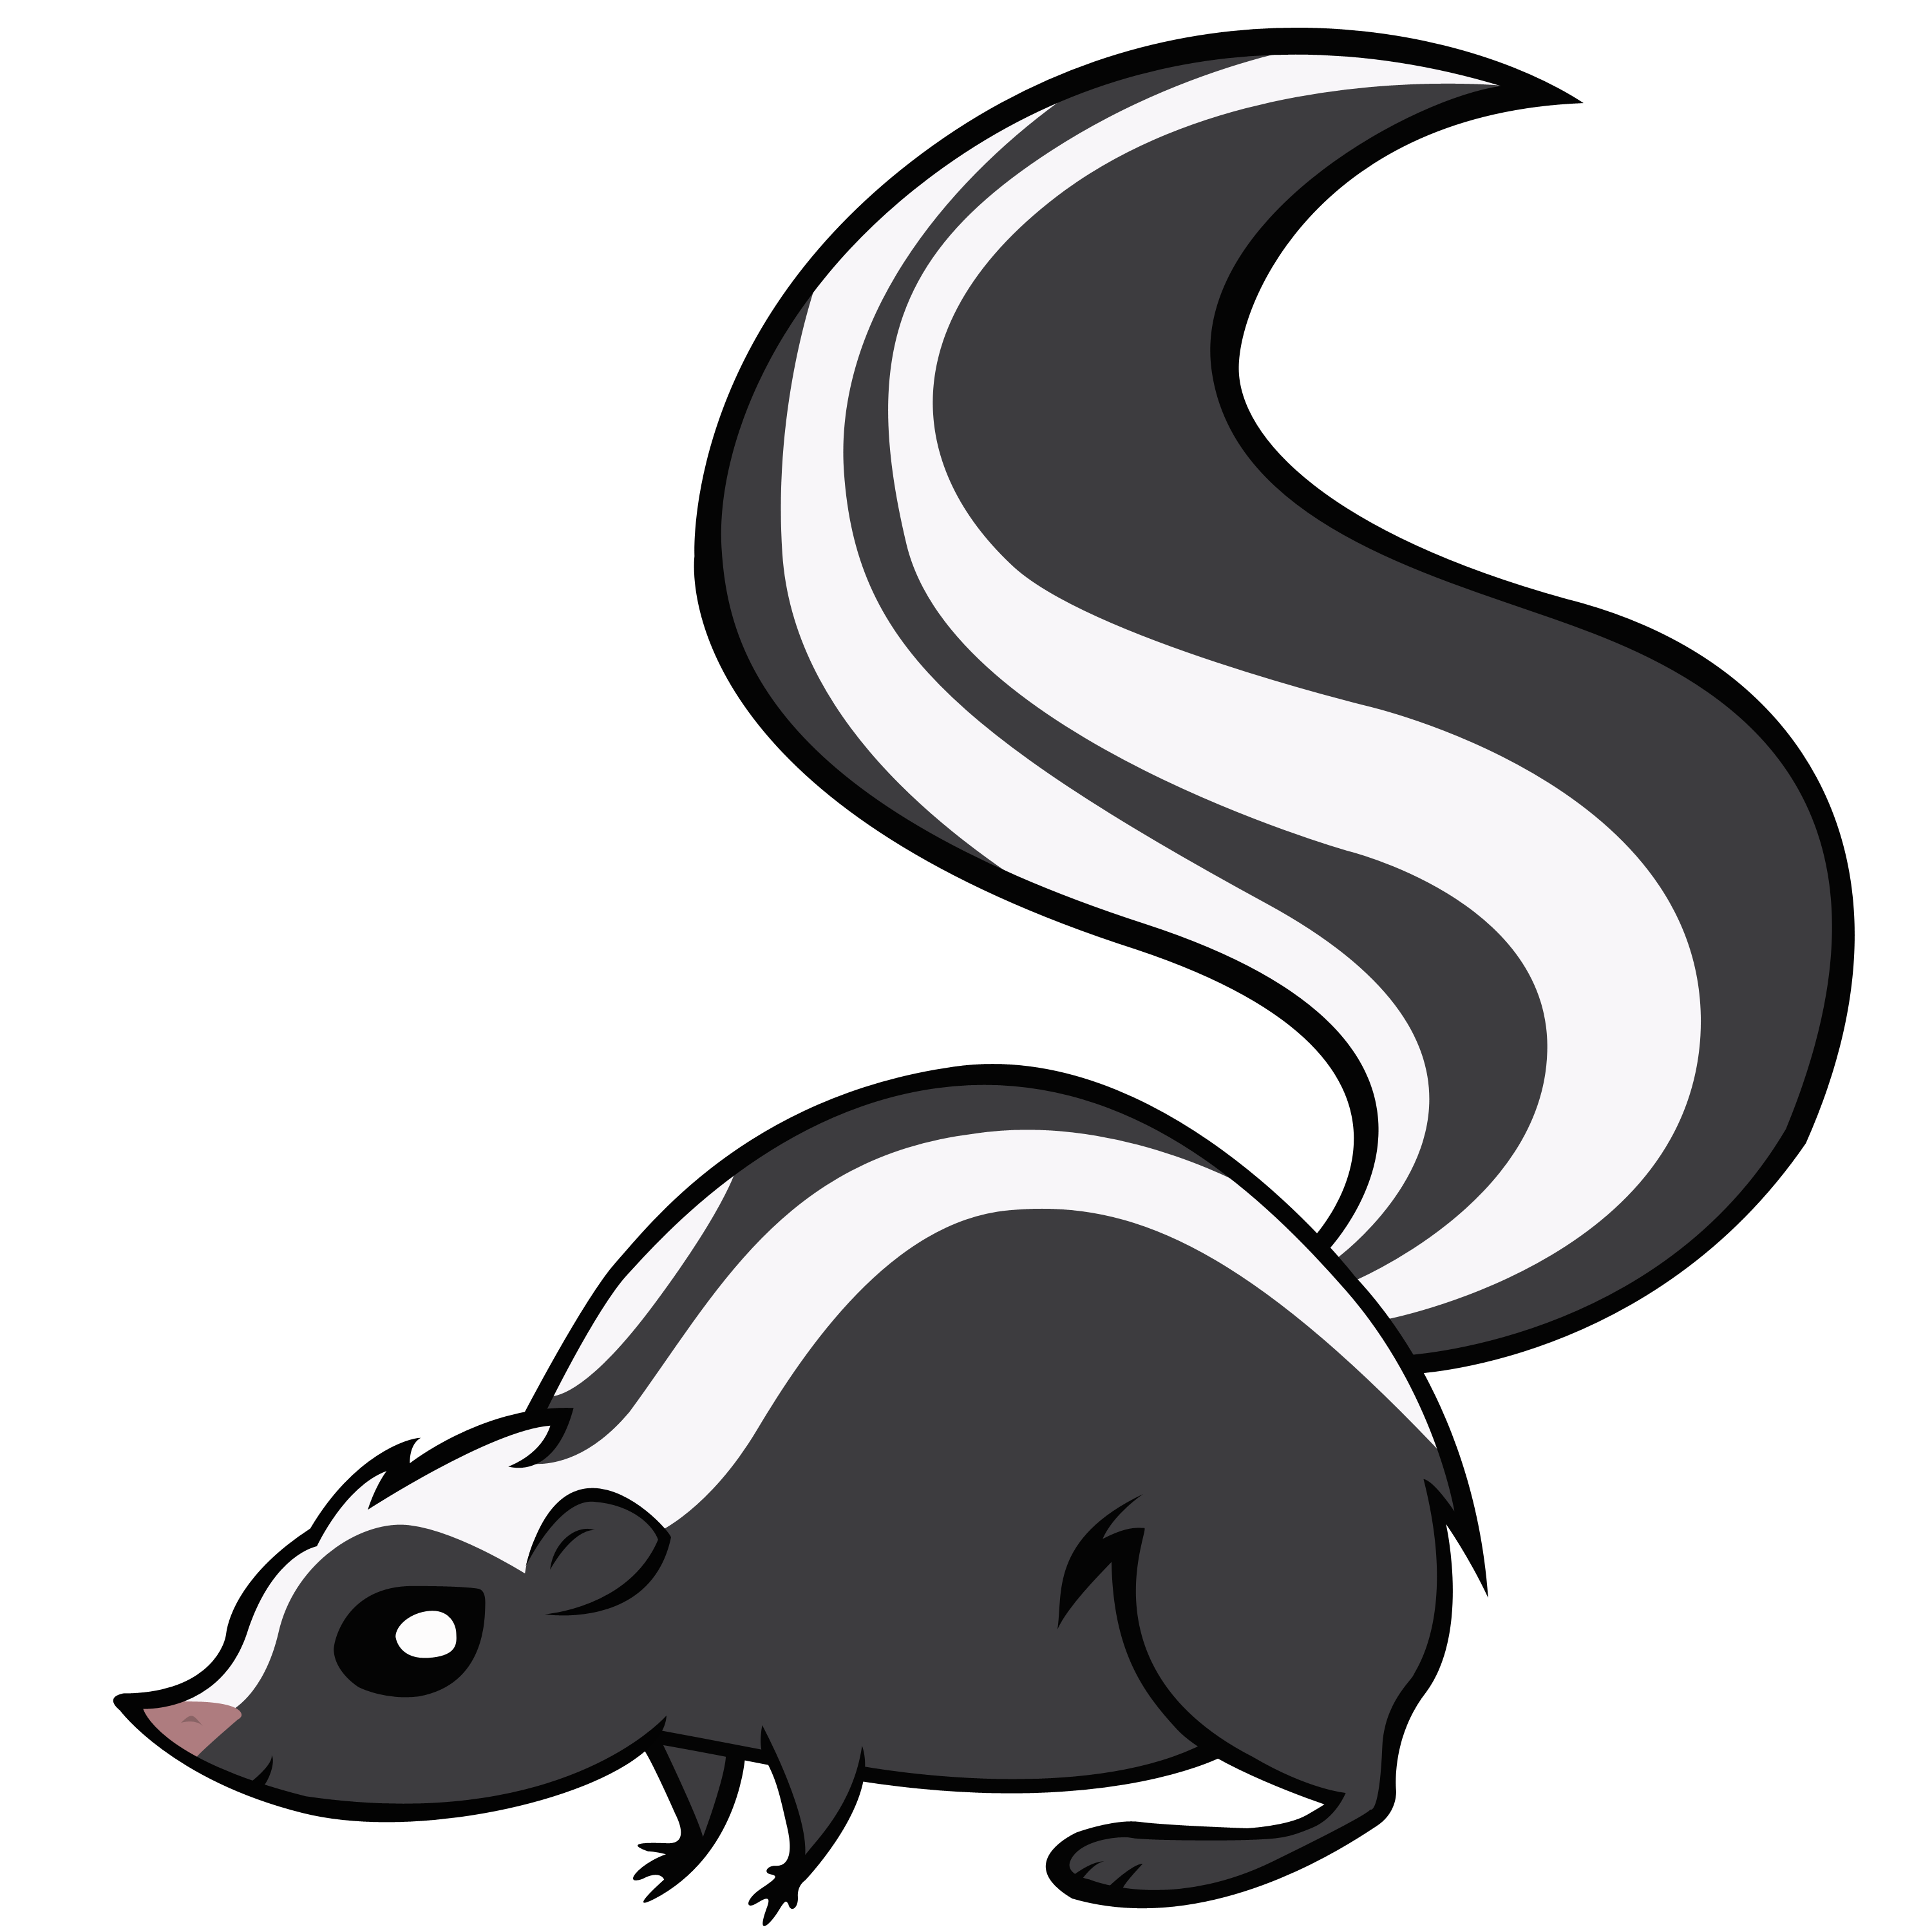 Skunk Clip art - Skunk Png Clipart png download - 3000*3000 - Free ...